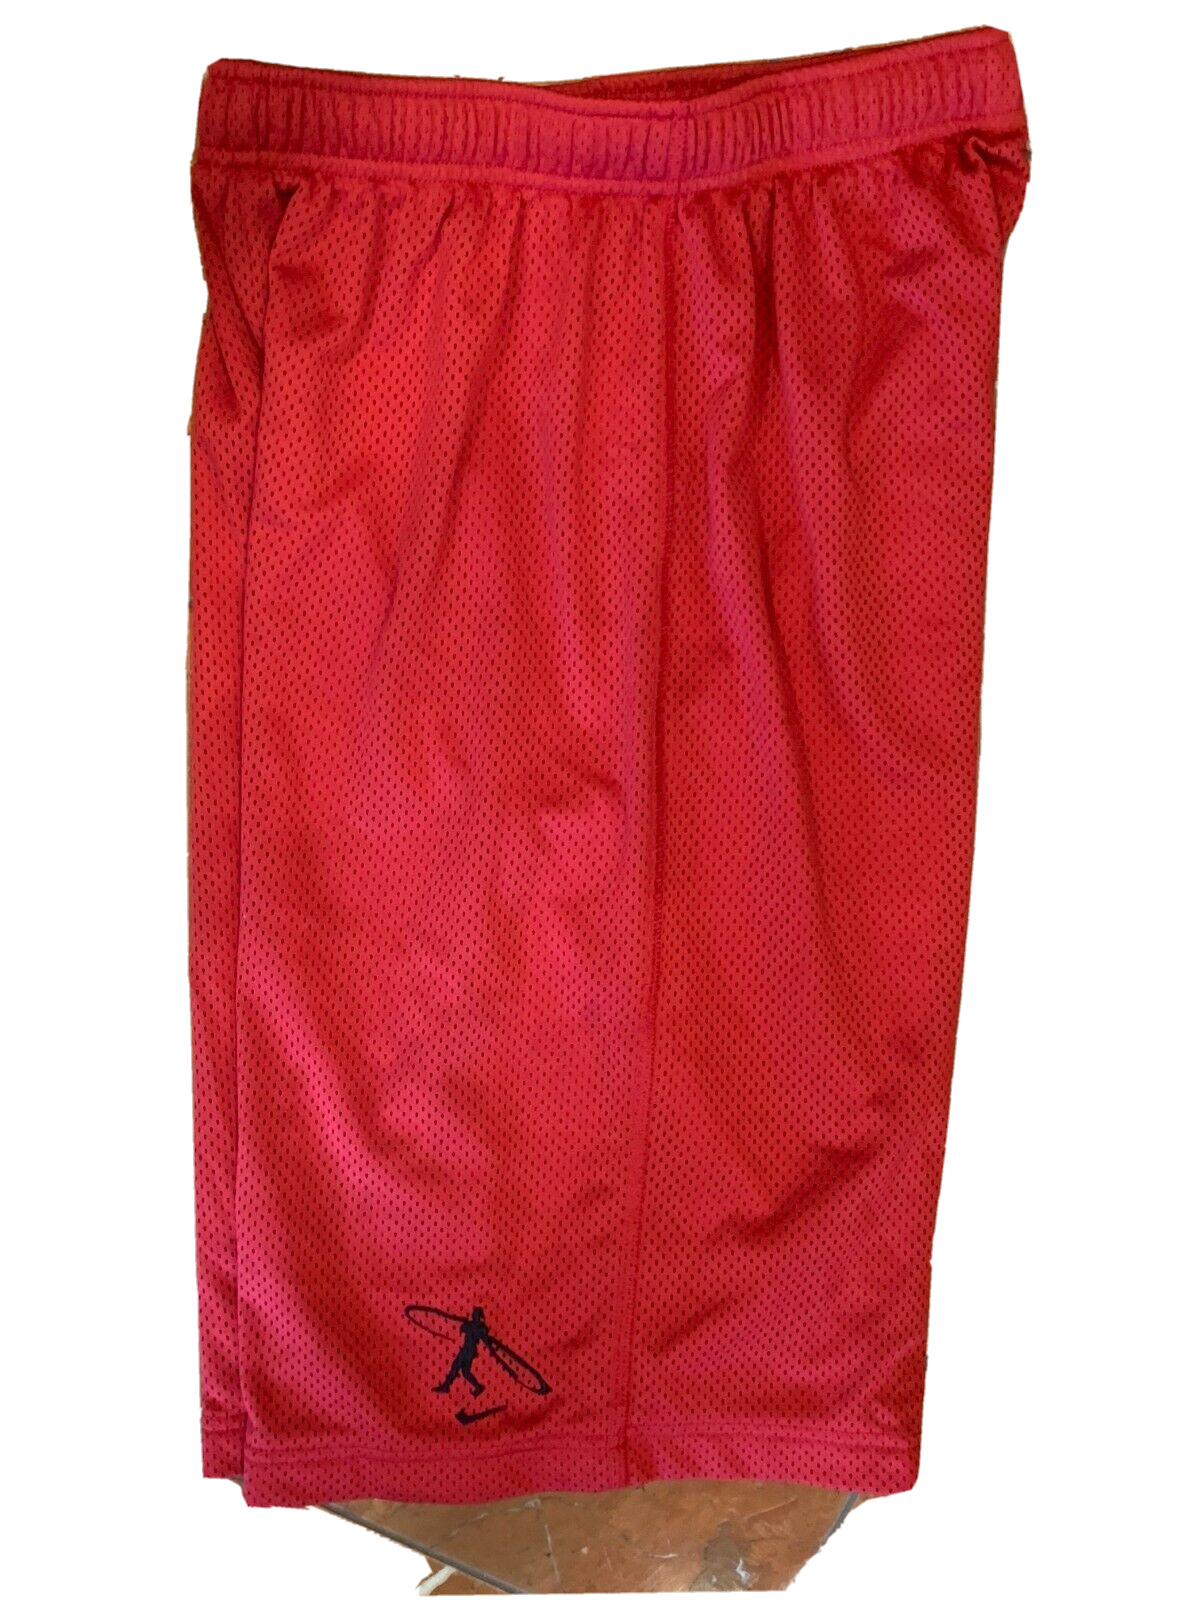 Nike Red Mesh Dri-fit Lined Training Baseball Basketball Shorts Boys Xl Euc